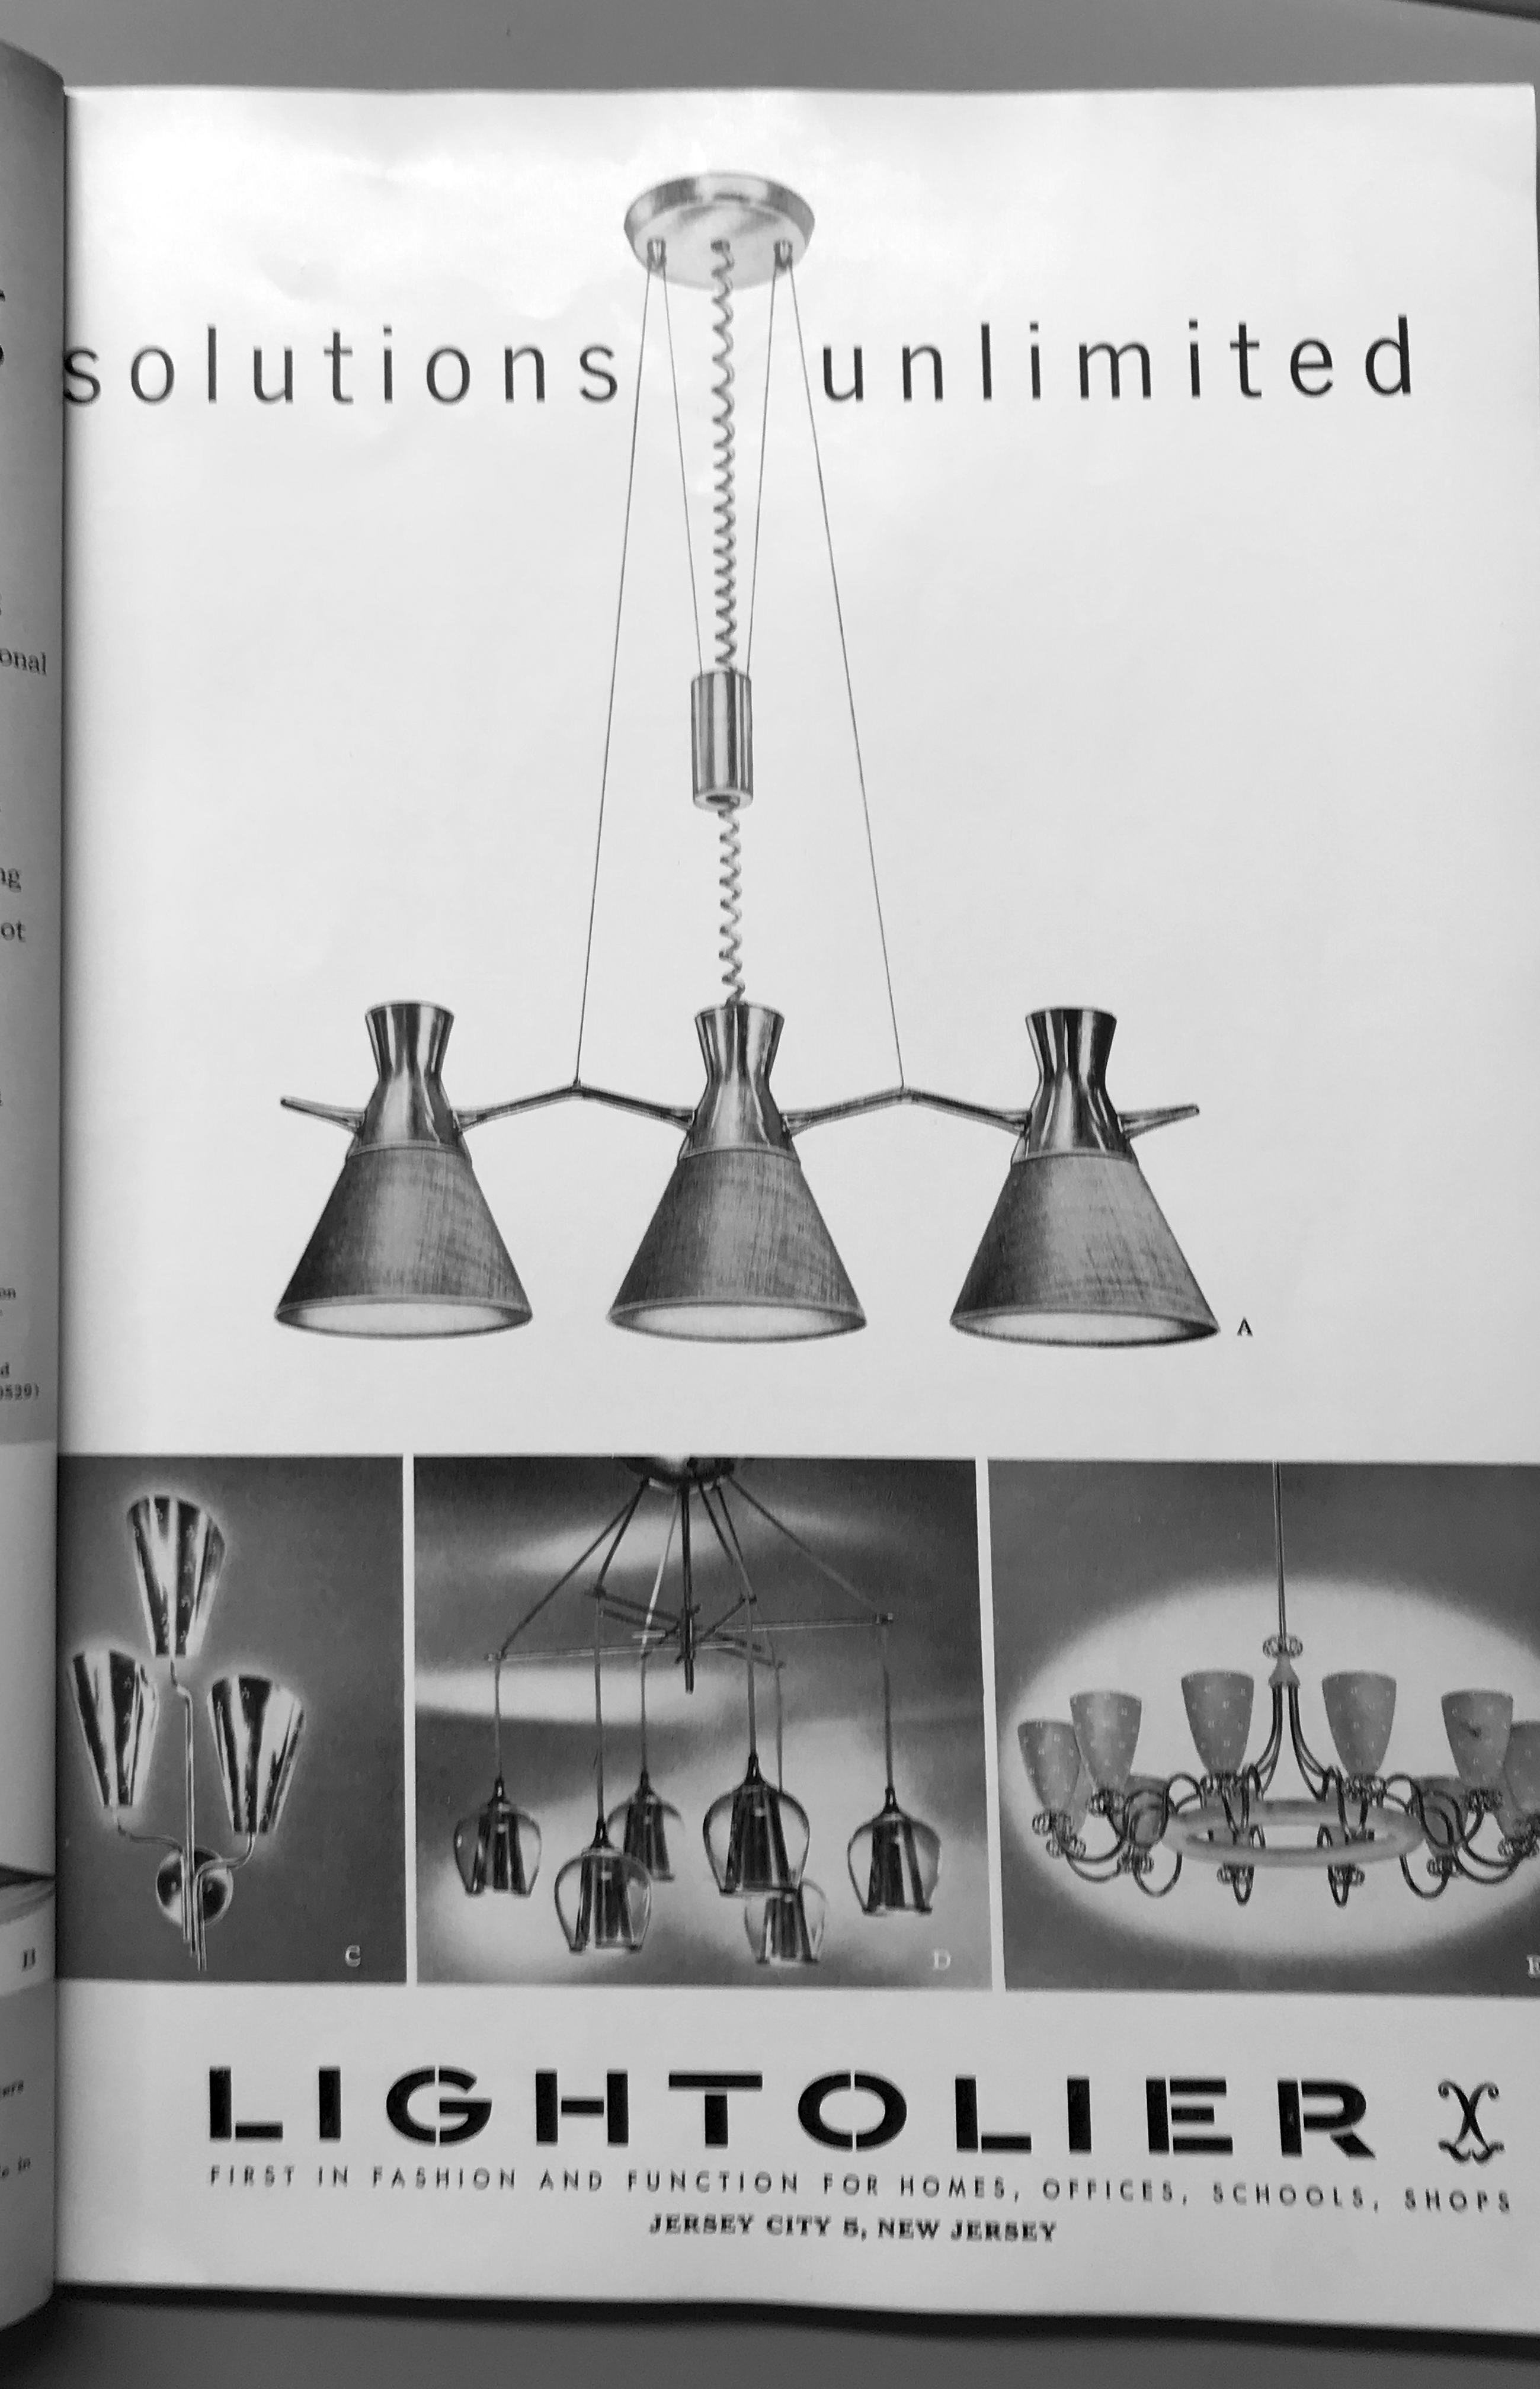 Lighting solutions unlimited, October 1955